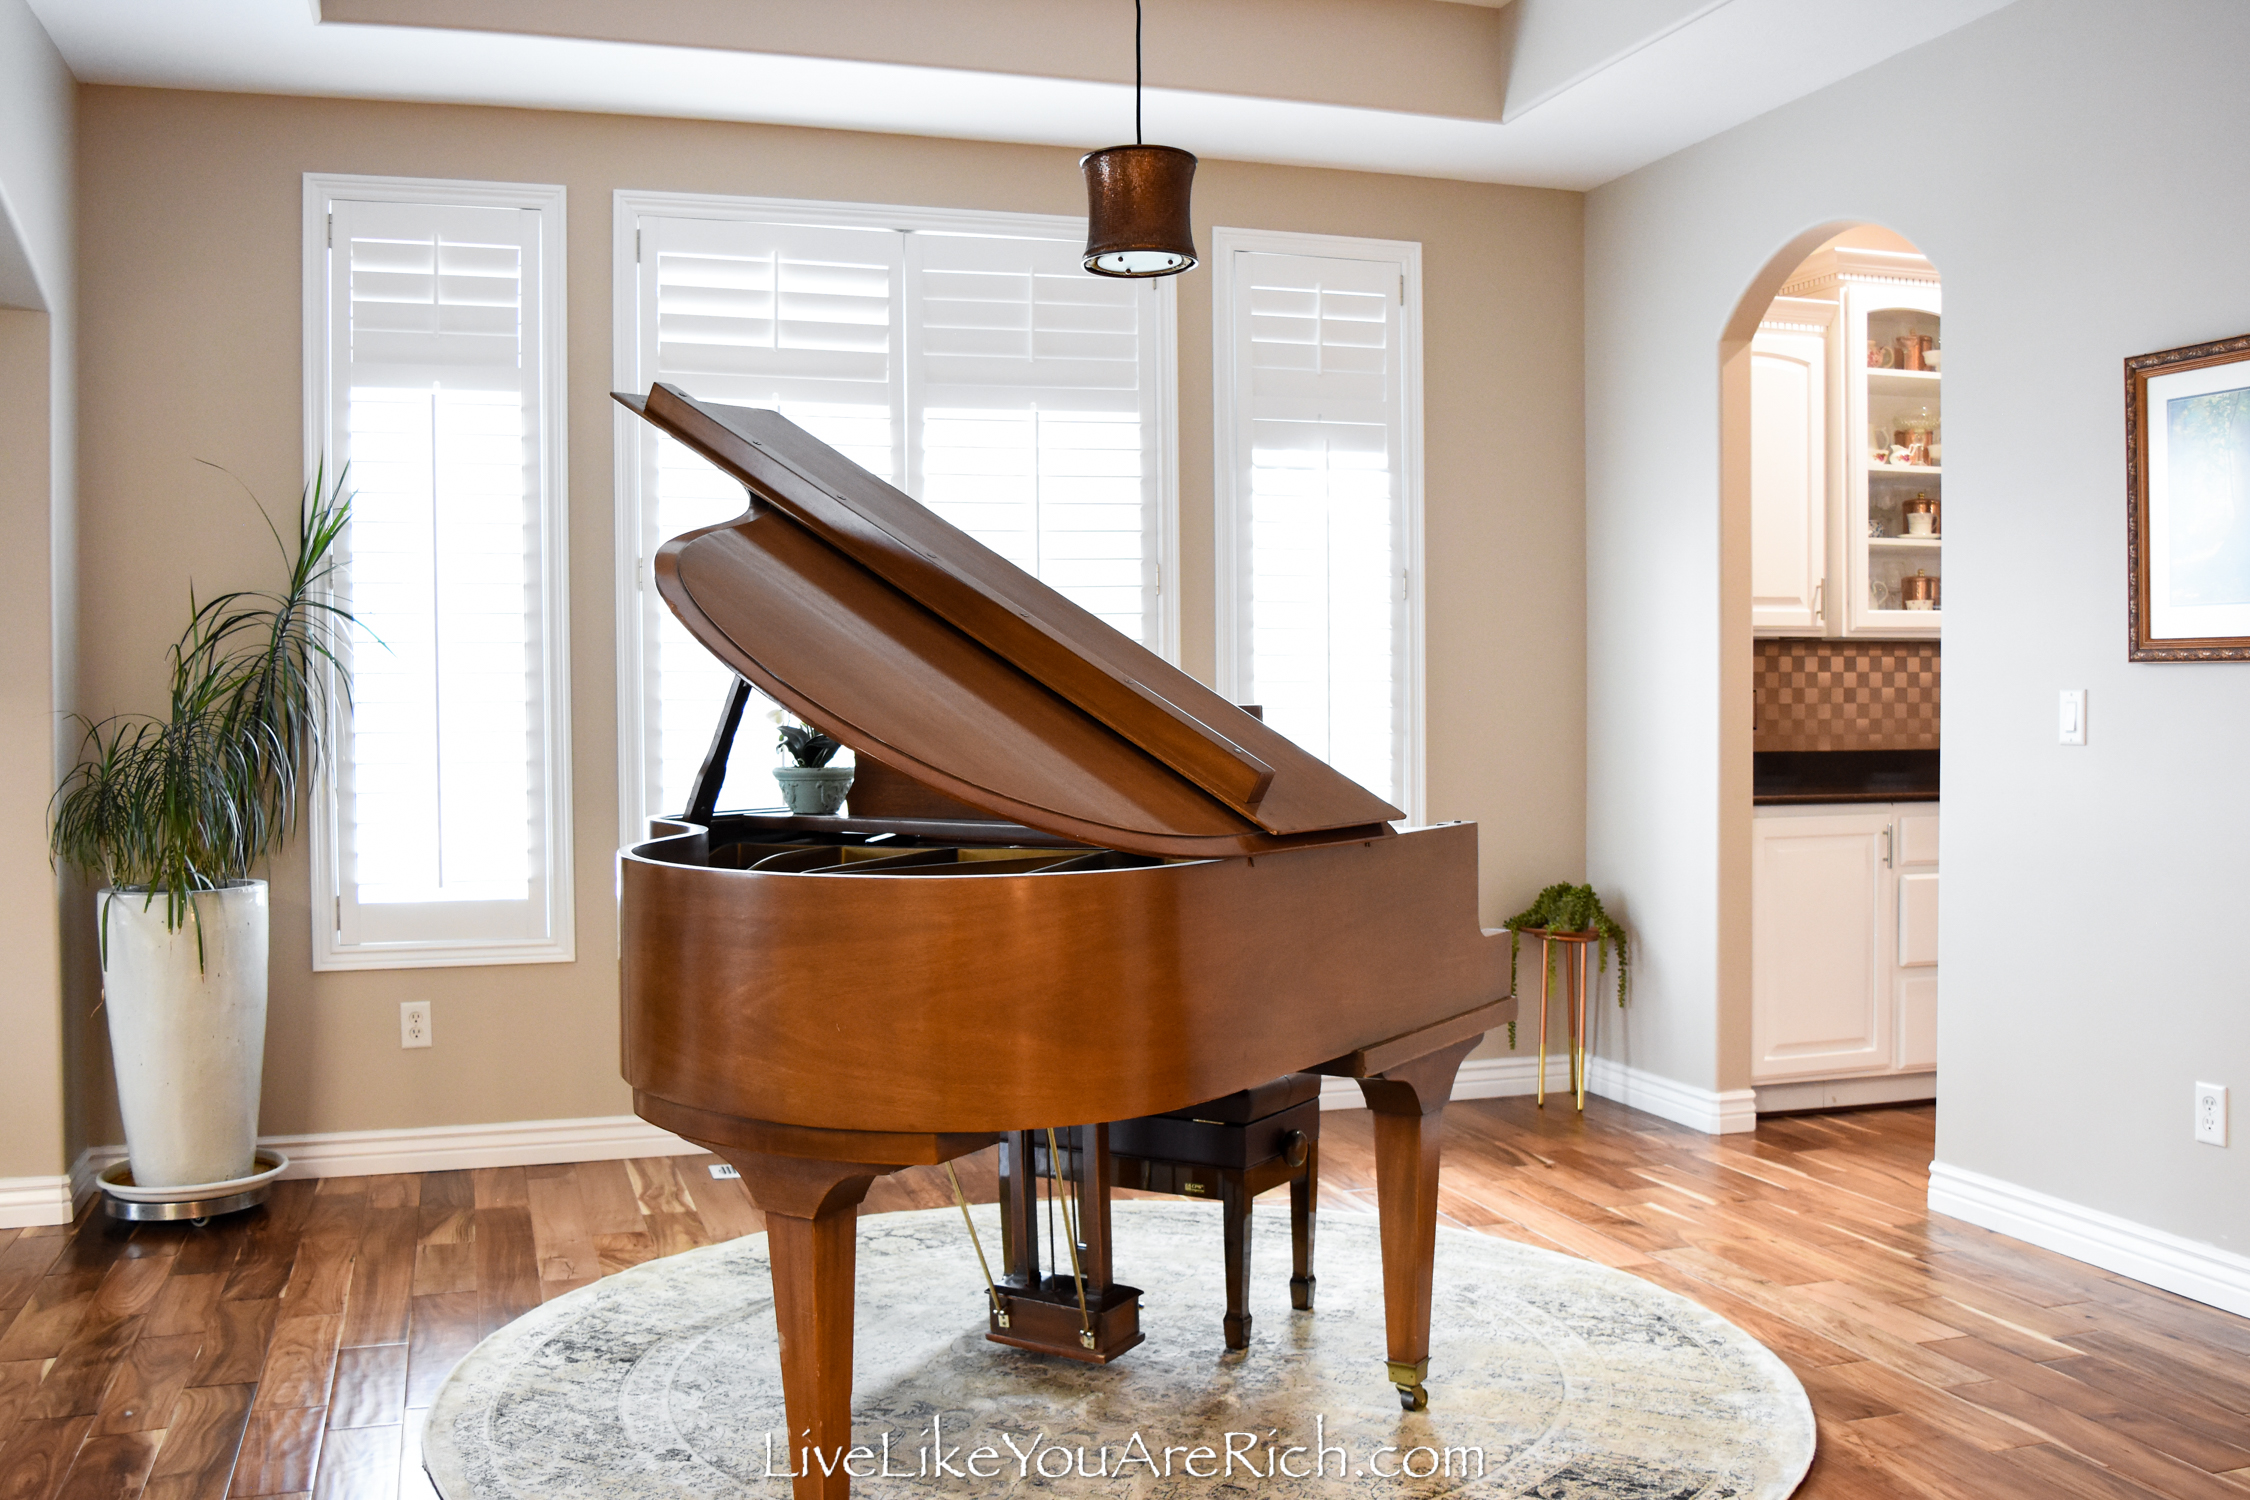 Piano Room Renovation Makeover - Home 3 